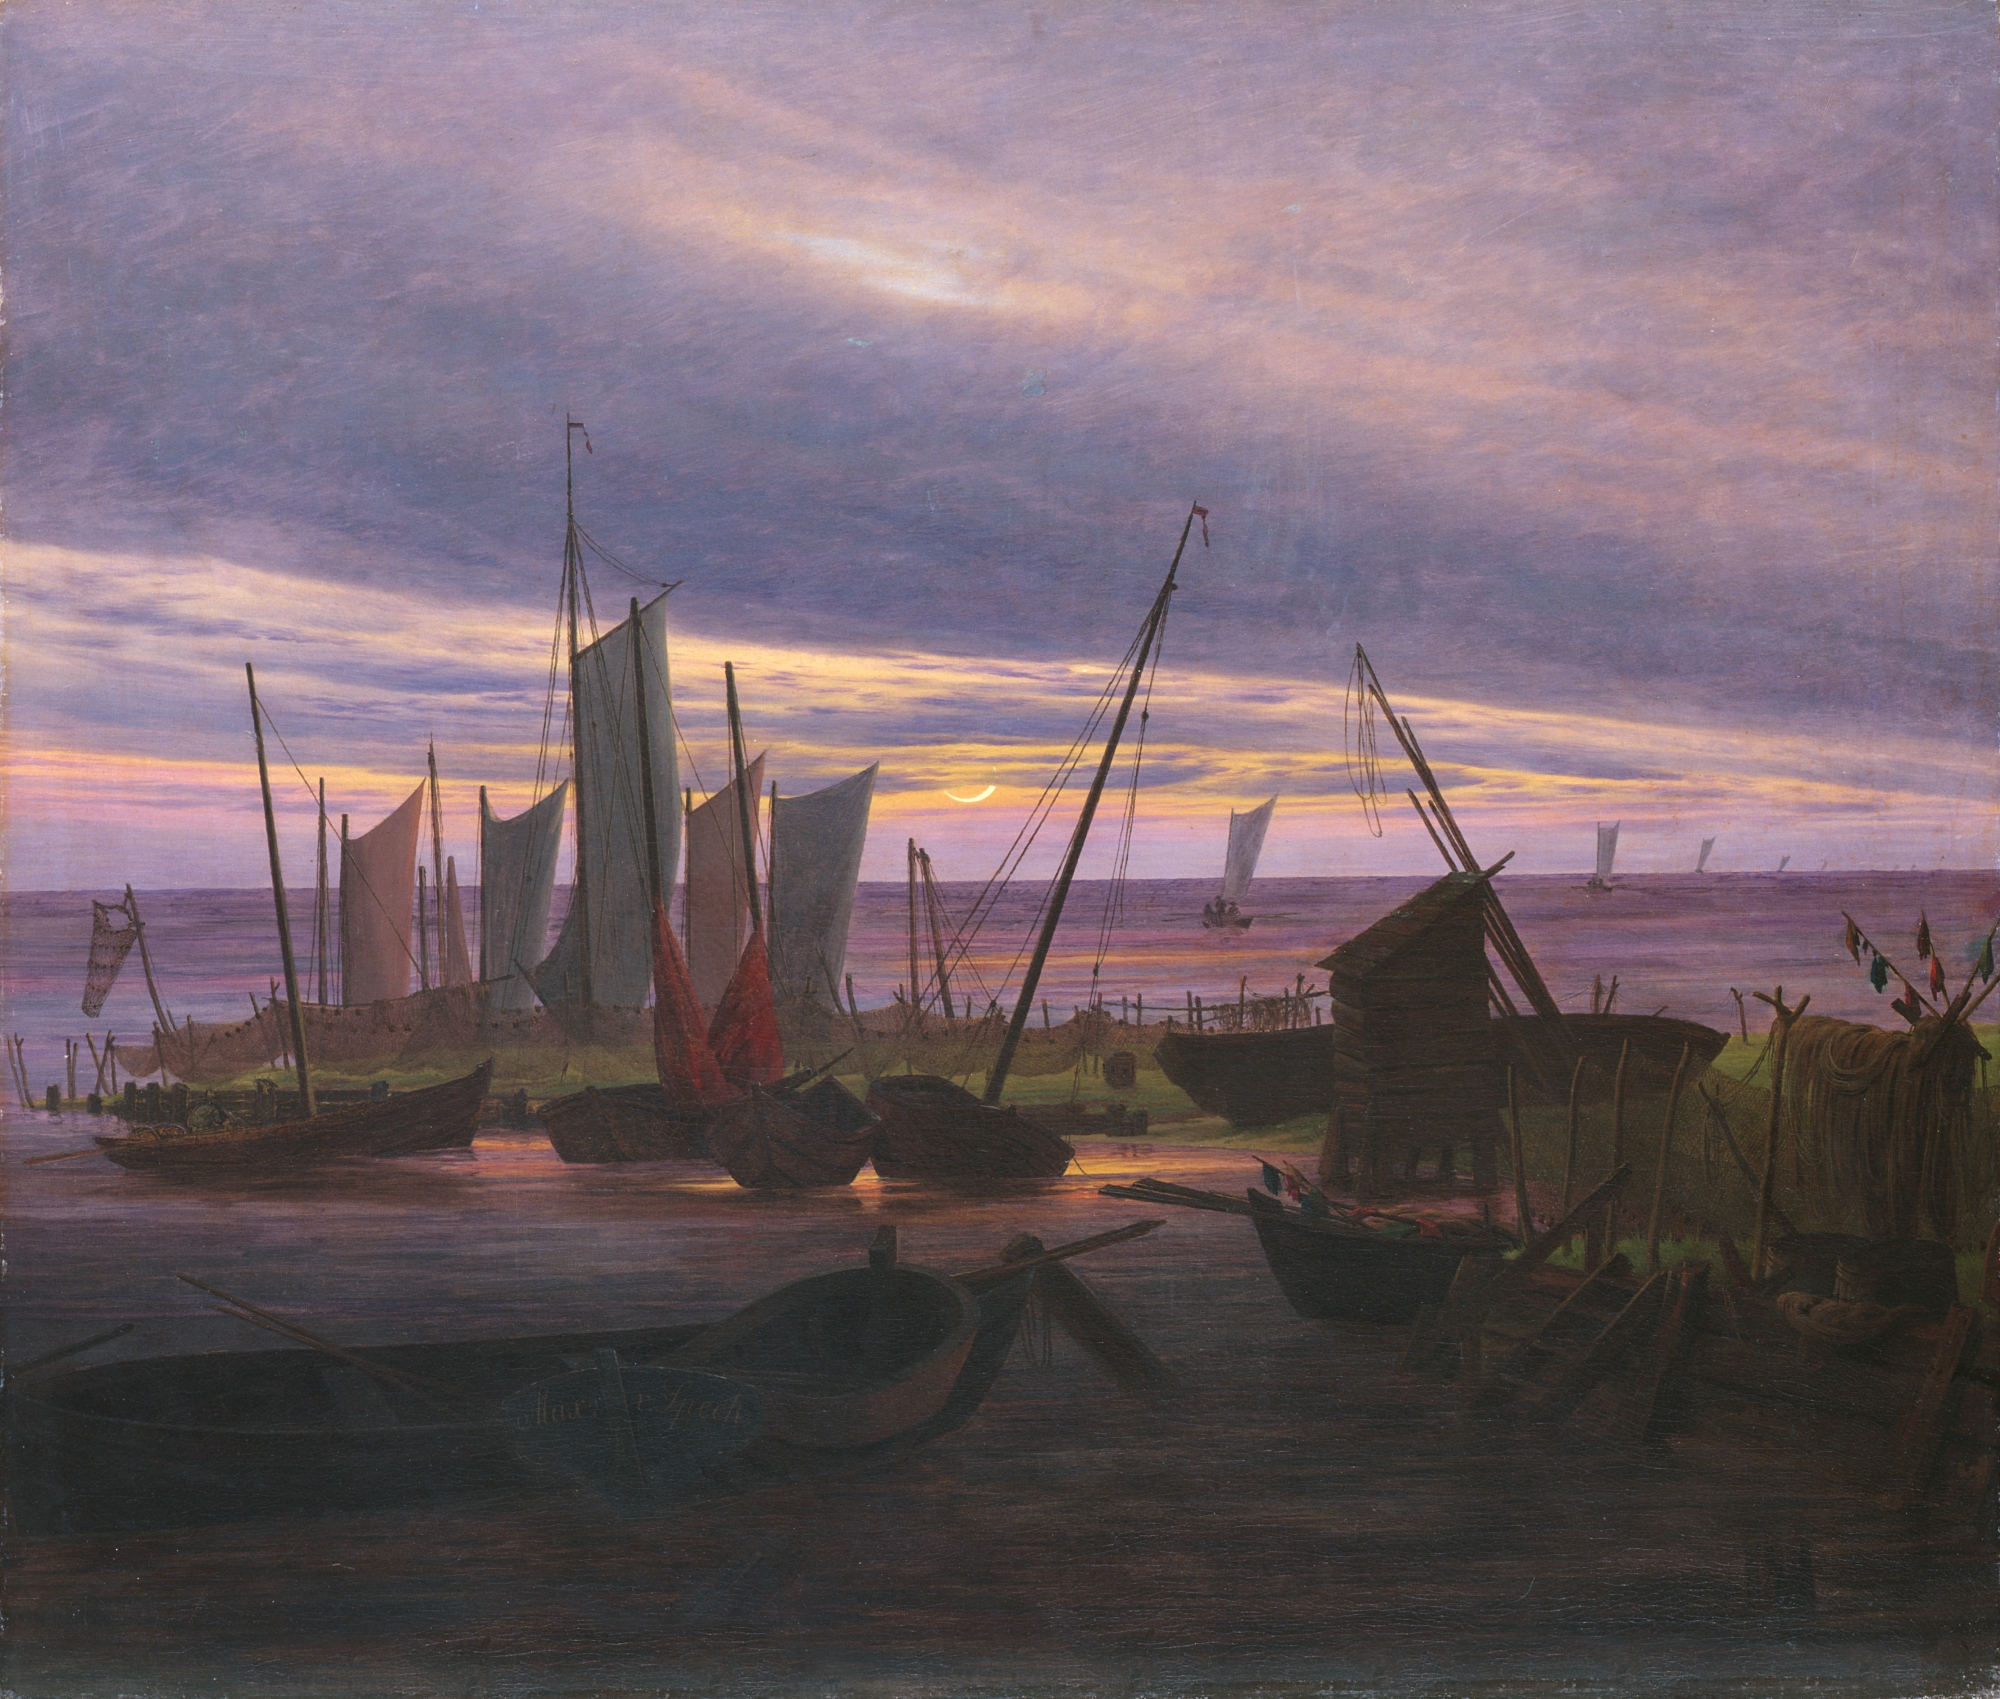 Лодки в гавани вечером (Boats in the Harbour at Evening) by Caspar David Friedrich - 1828 - 76,5 х 88,2 см 